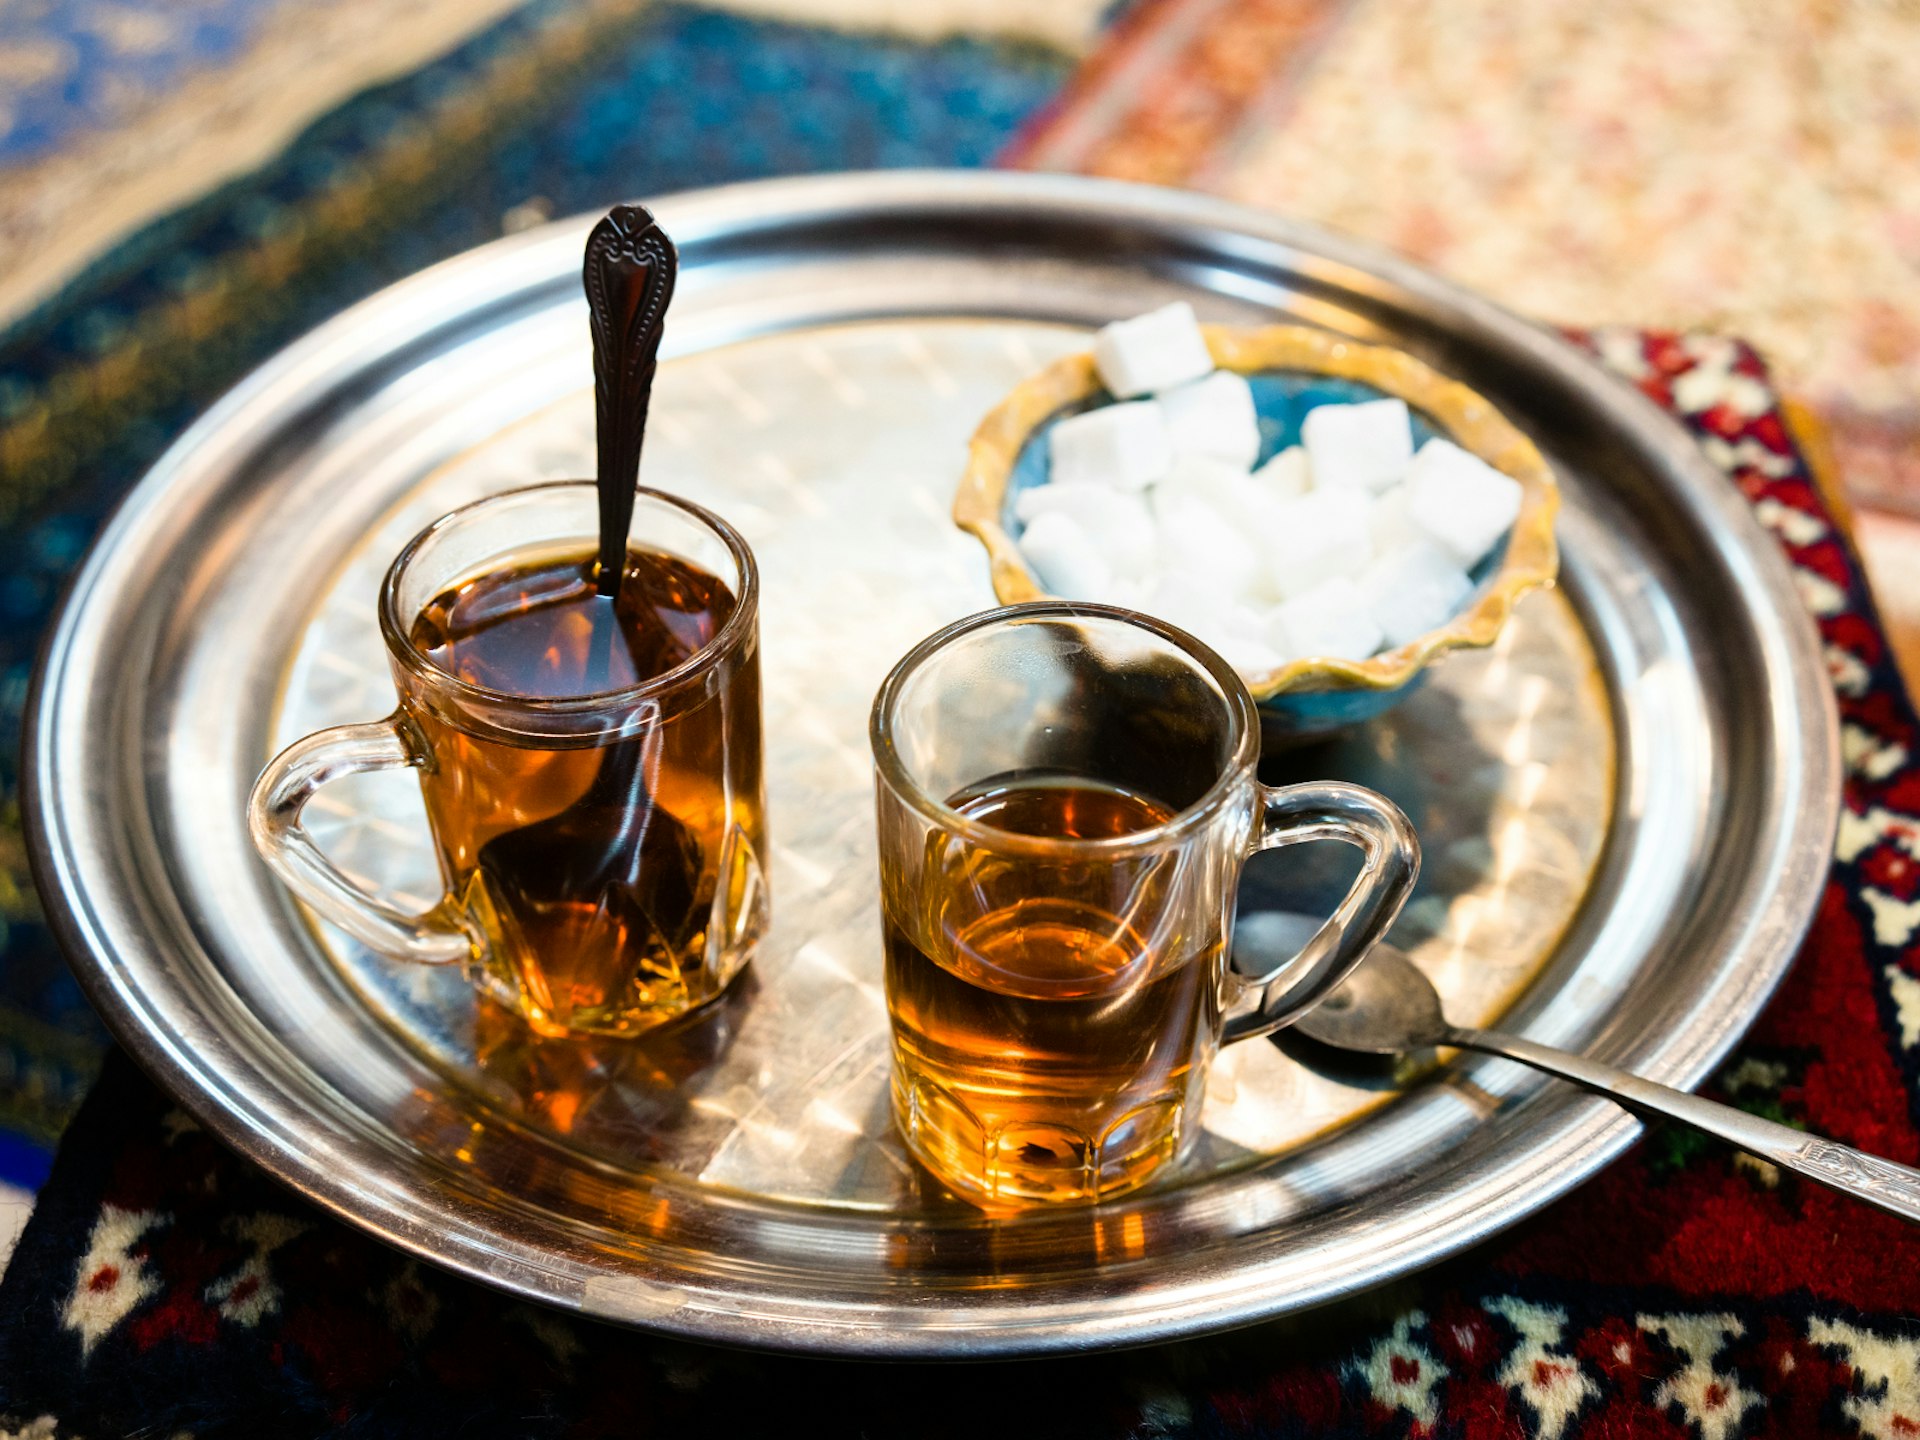 A tea set in local tea house in Iran